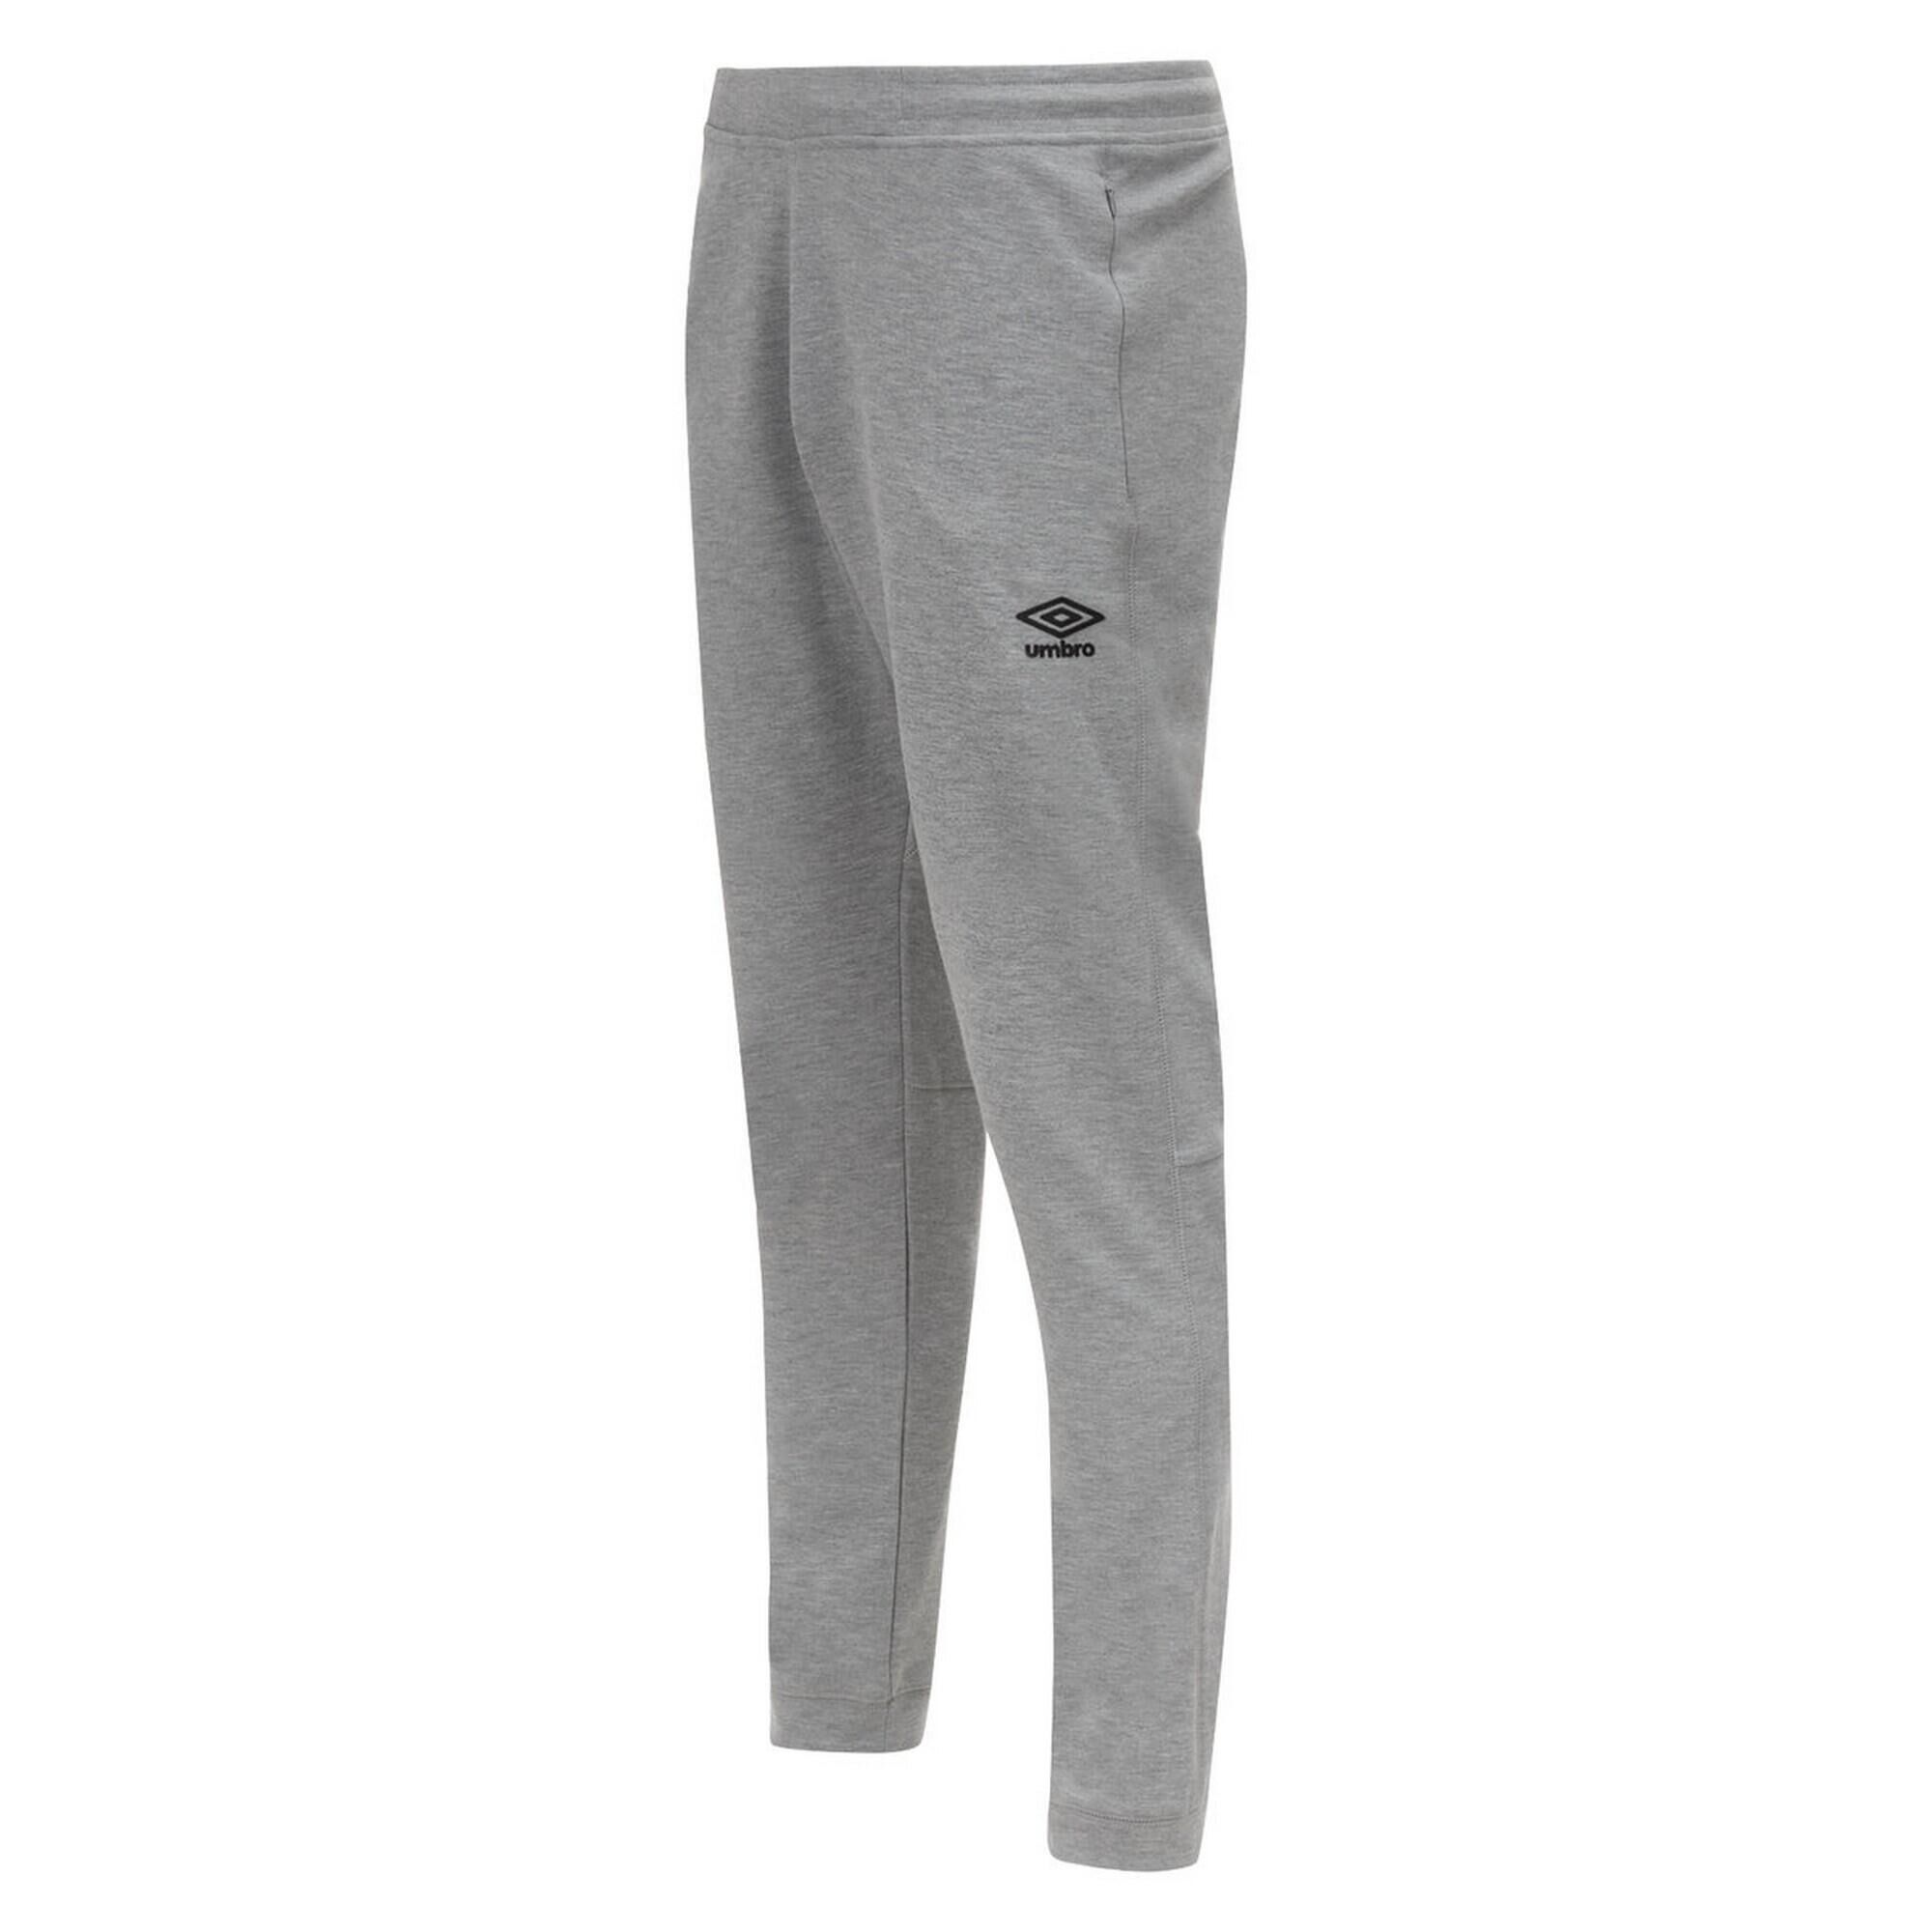 UMBRO Mens Pro Fleece Jogging Bottoms (Grey Marl/Black)